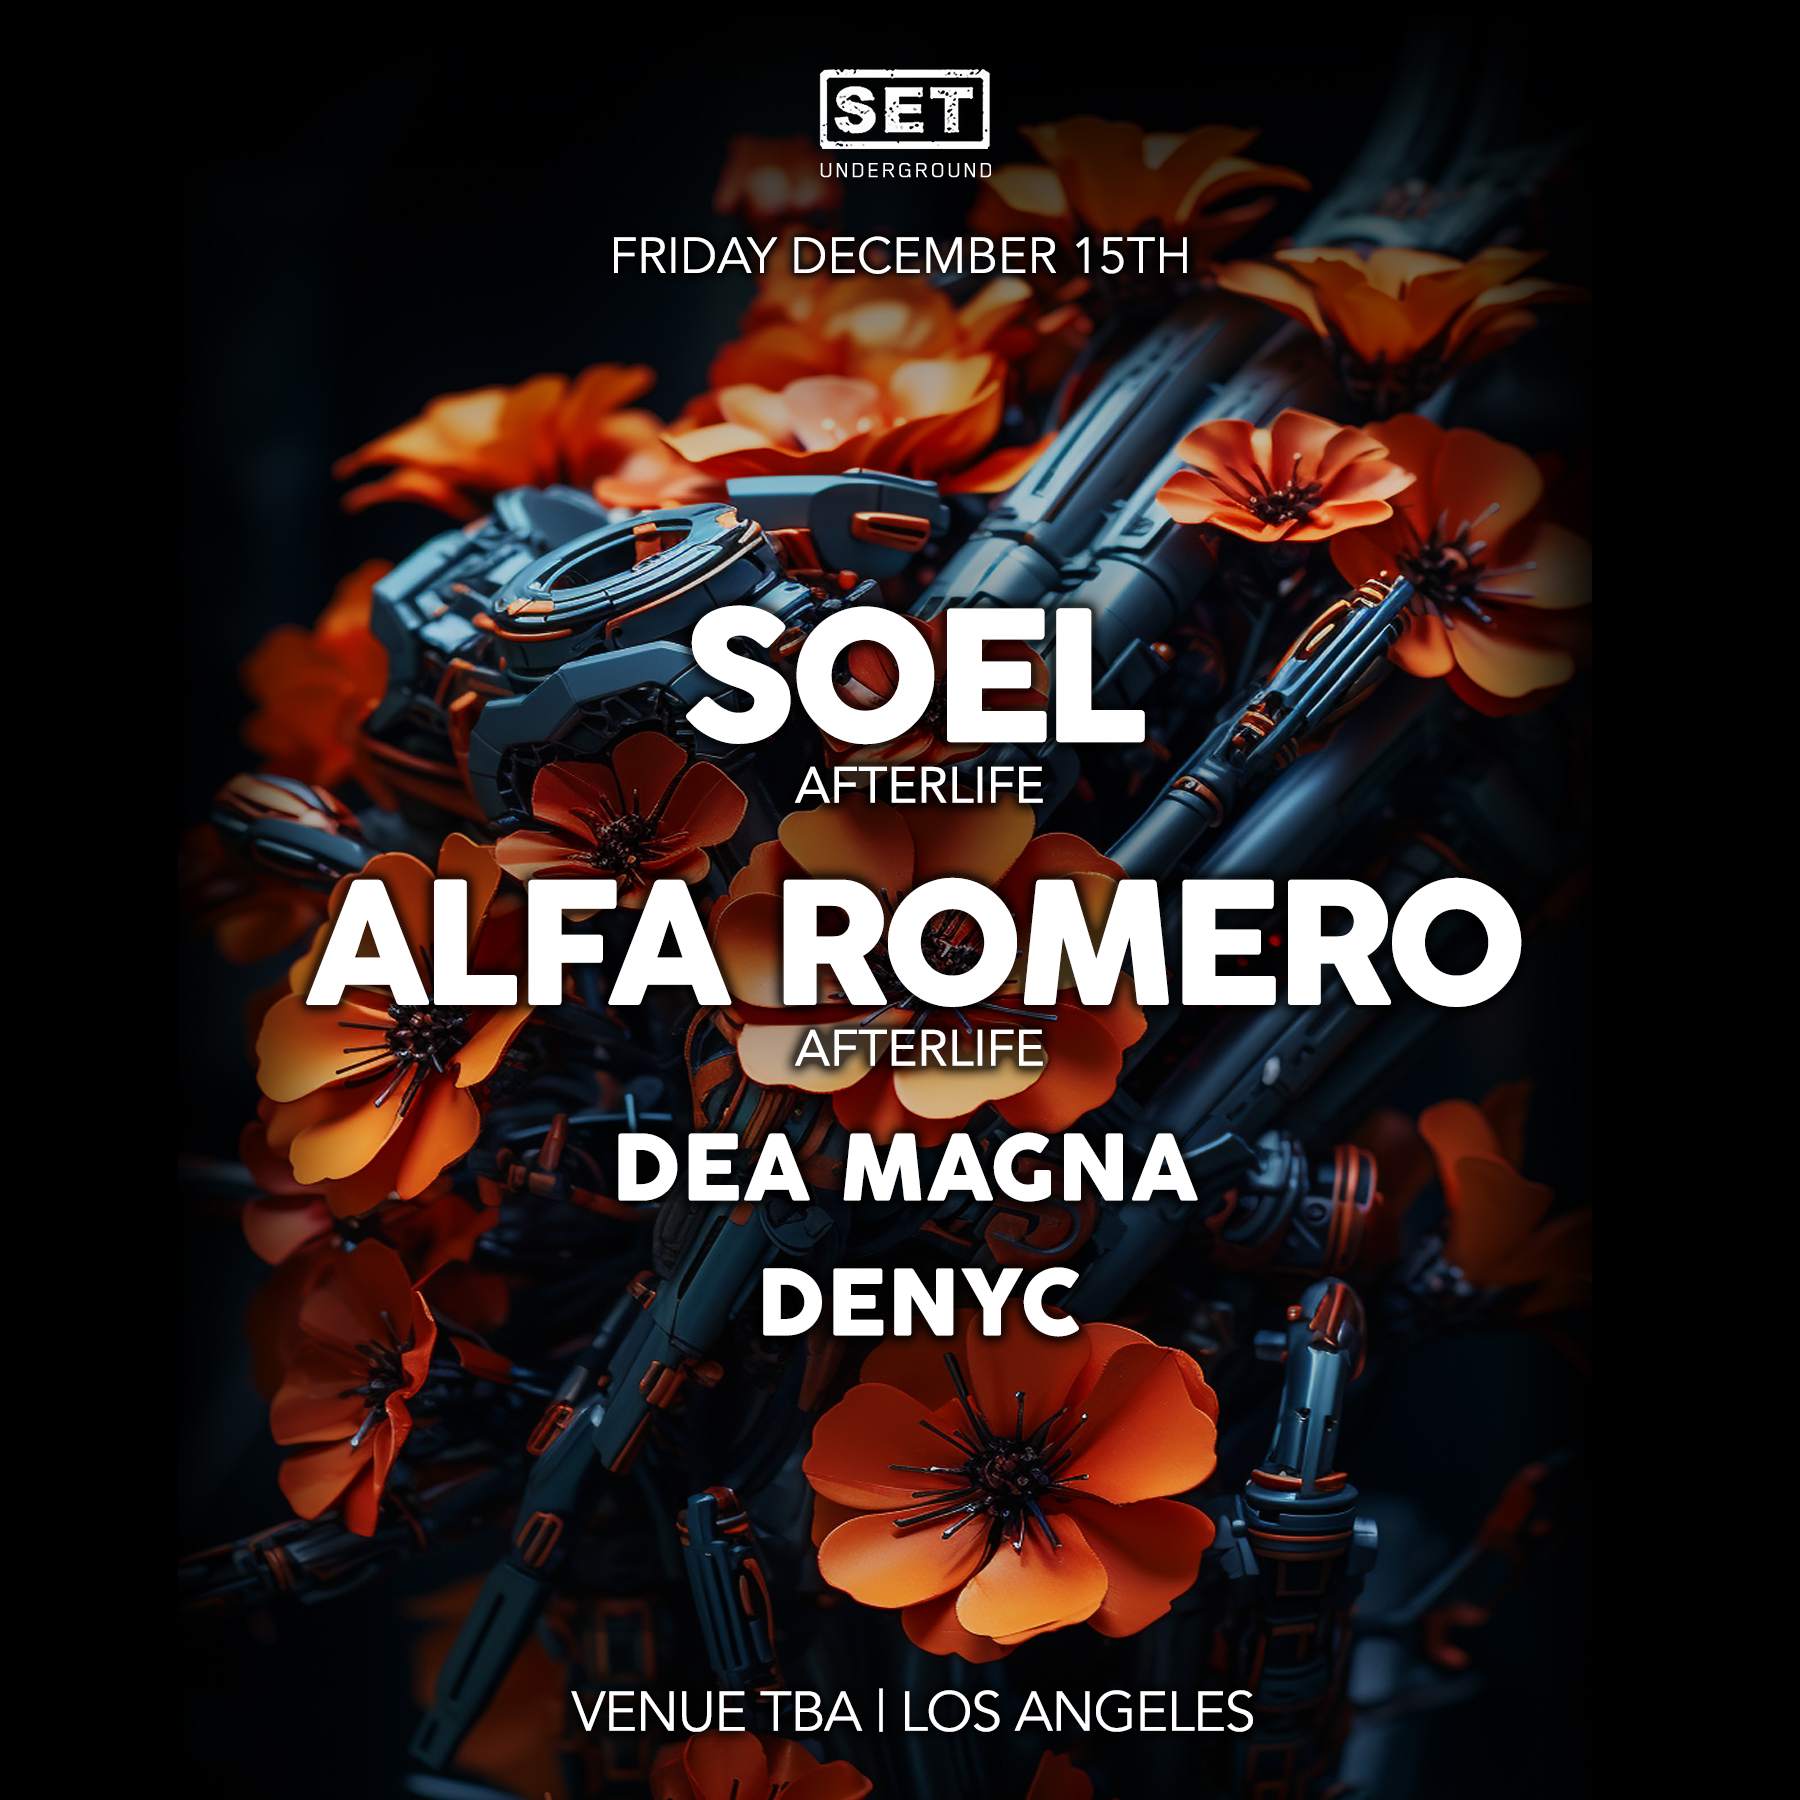 SET with SOEL & ALFA ROMERO (Afterlife) in DTLA, Future Factory, Los Angeles,  December 15 to December 16